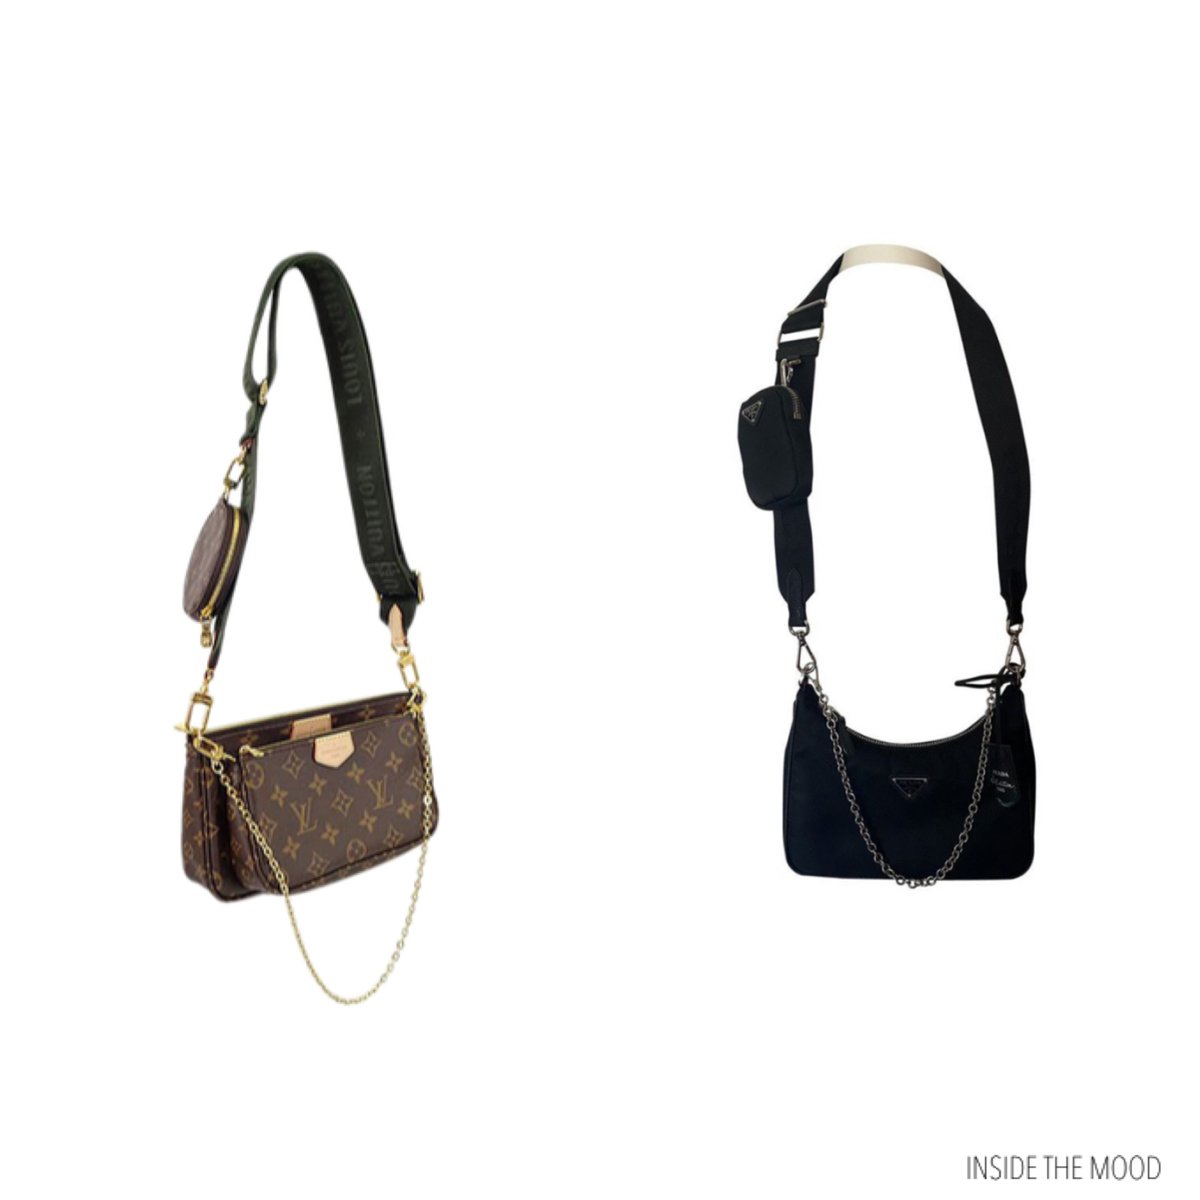 The Handbag Battlefield Louis Vuitton Gucci and Prada